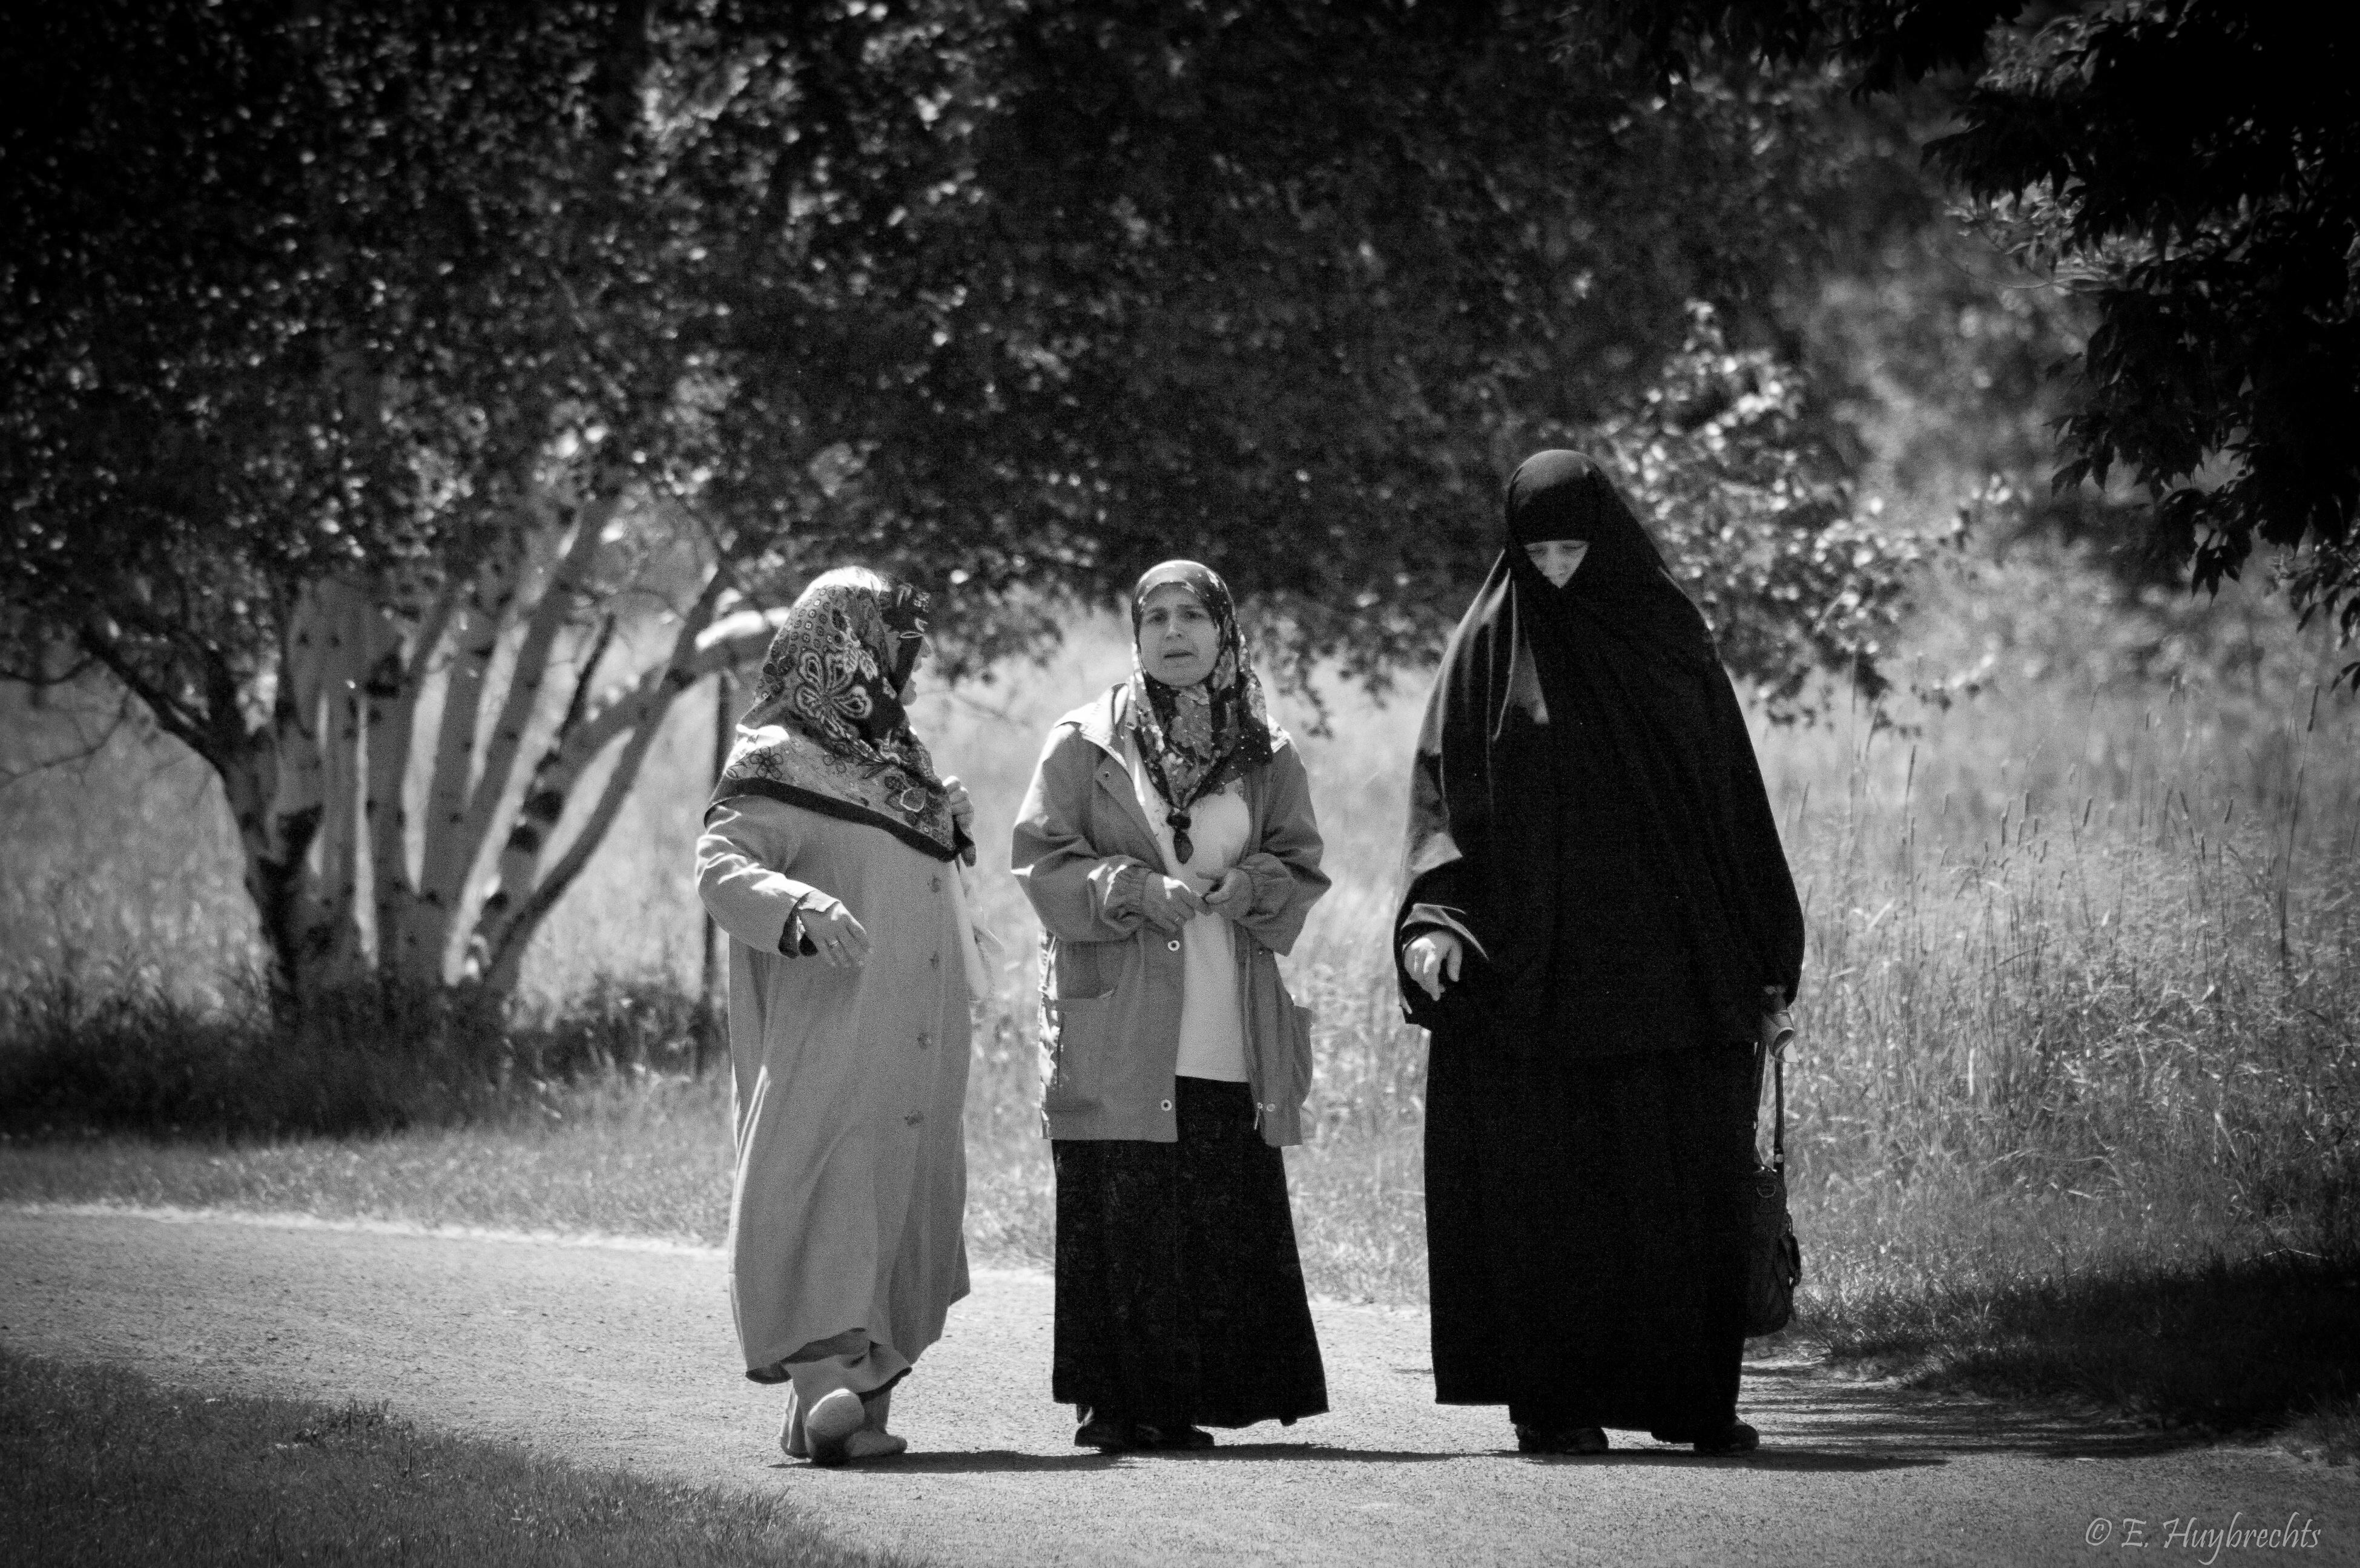 Trois femmes musulmanes